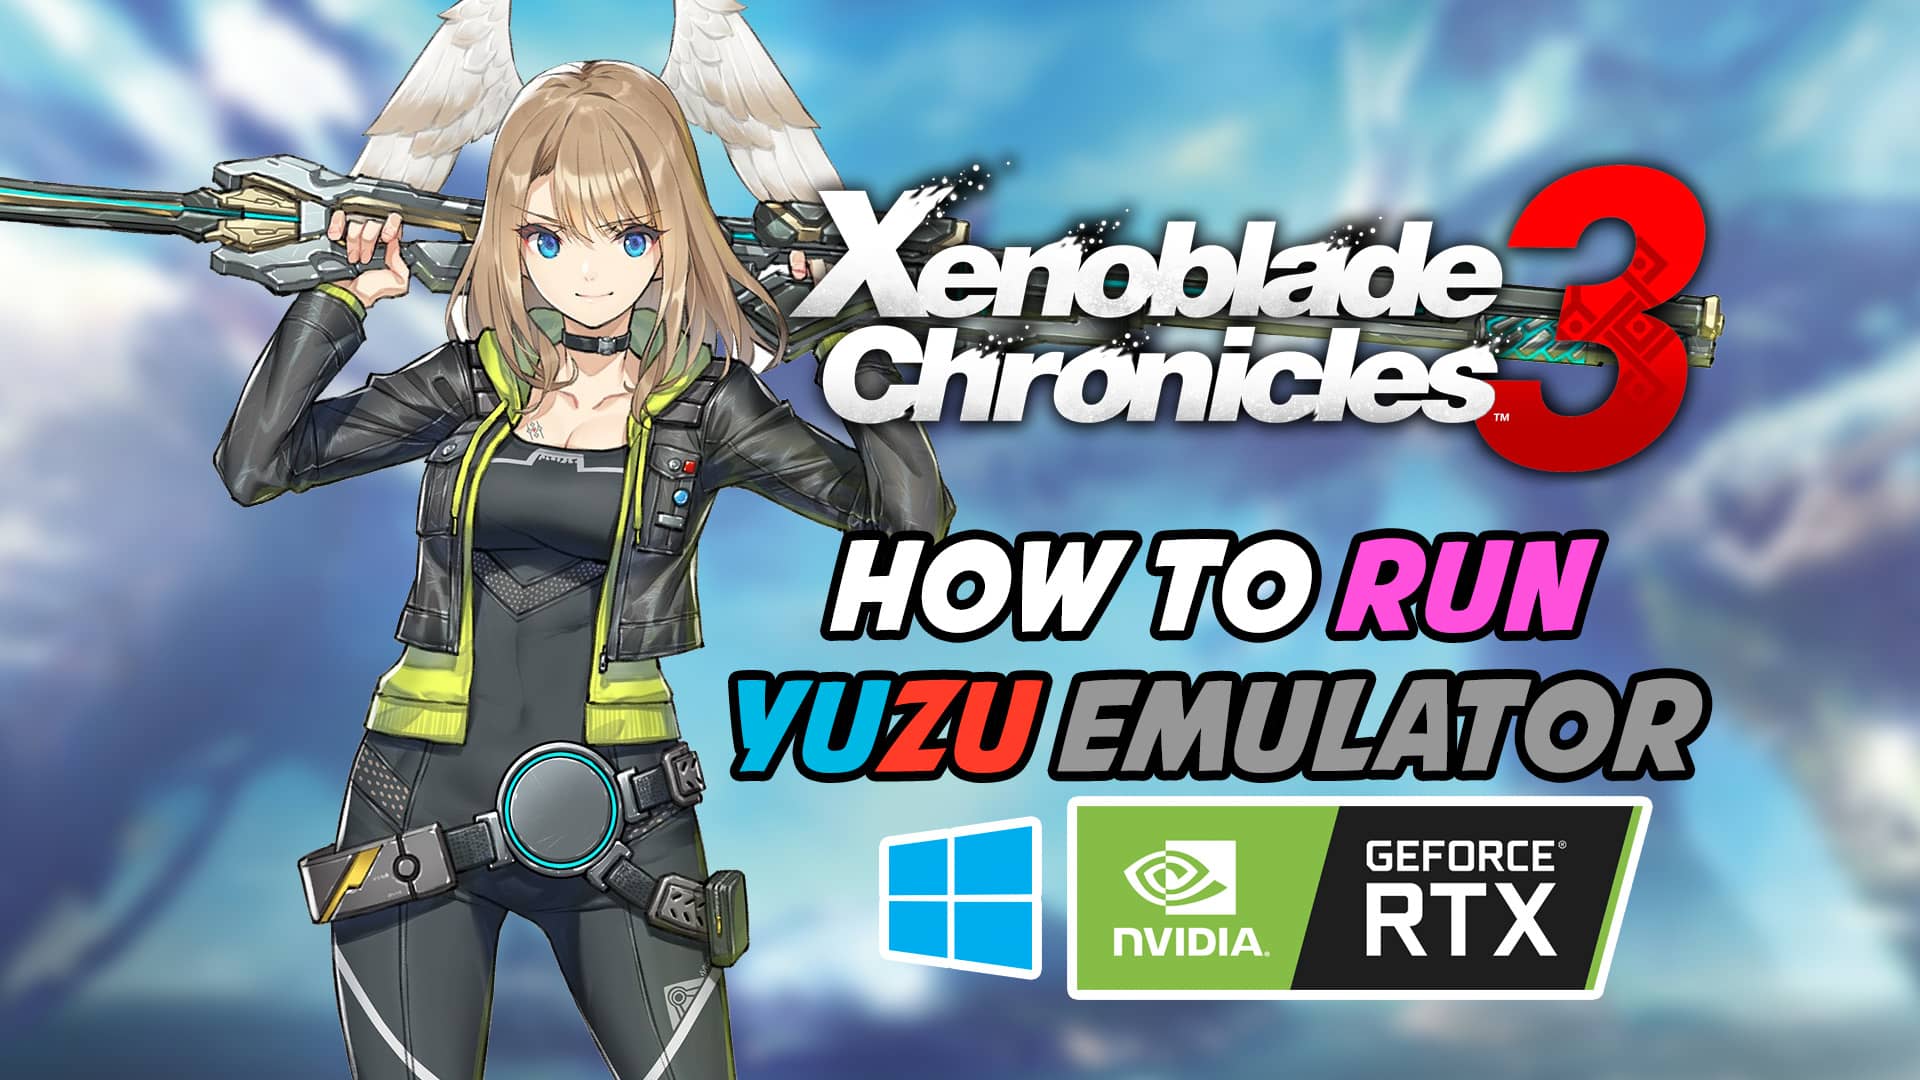 How To Run Xenoblade Chronicles 3 On Latest Yuzu Emulator Build on Vimeo